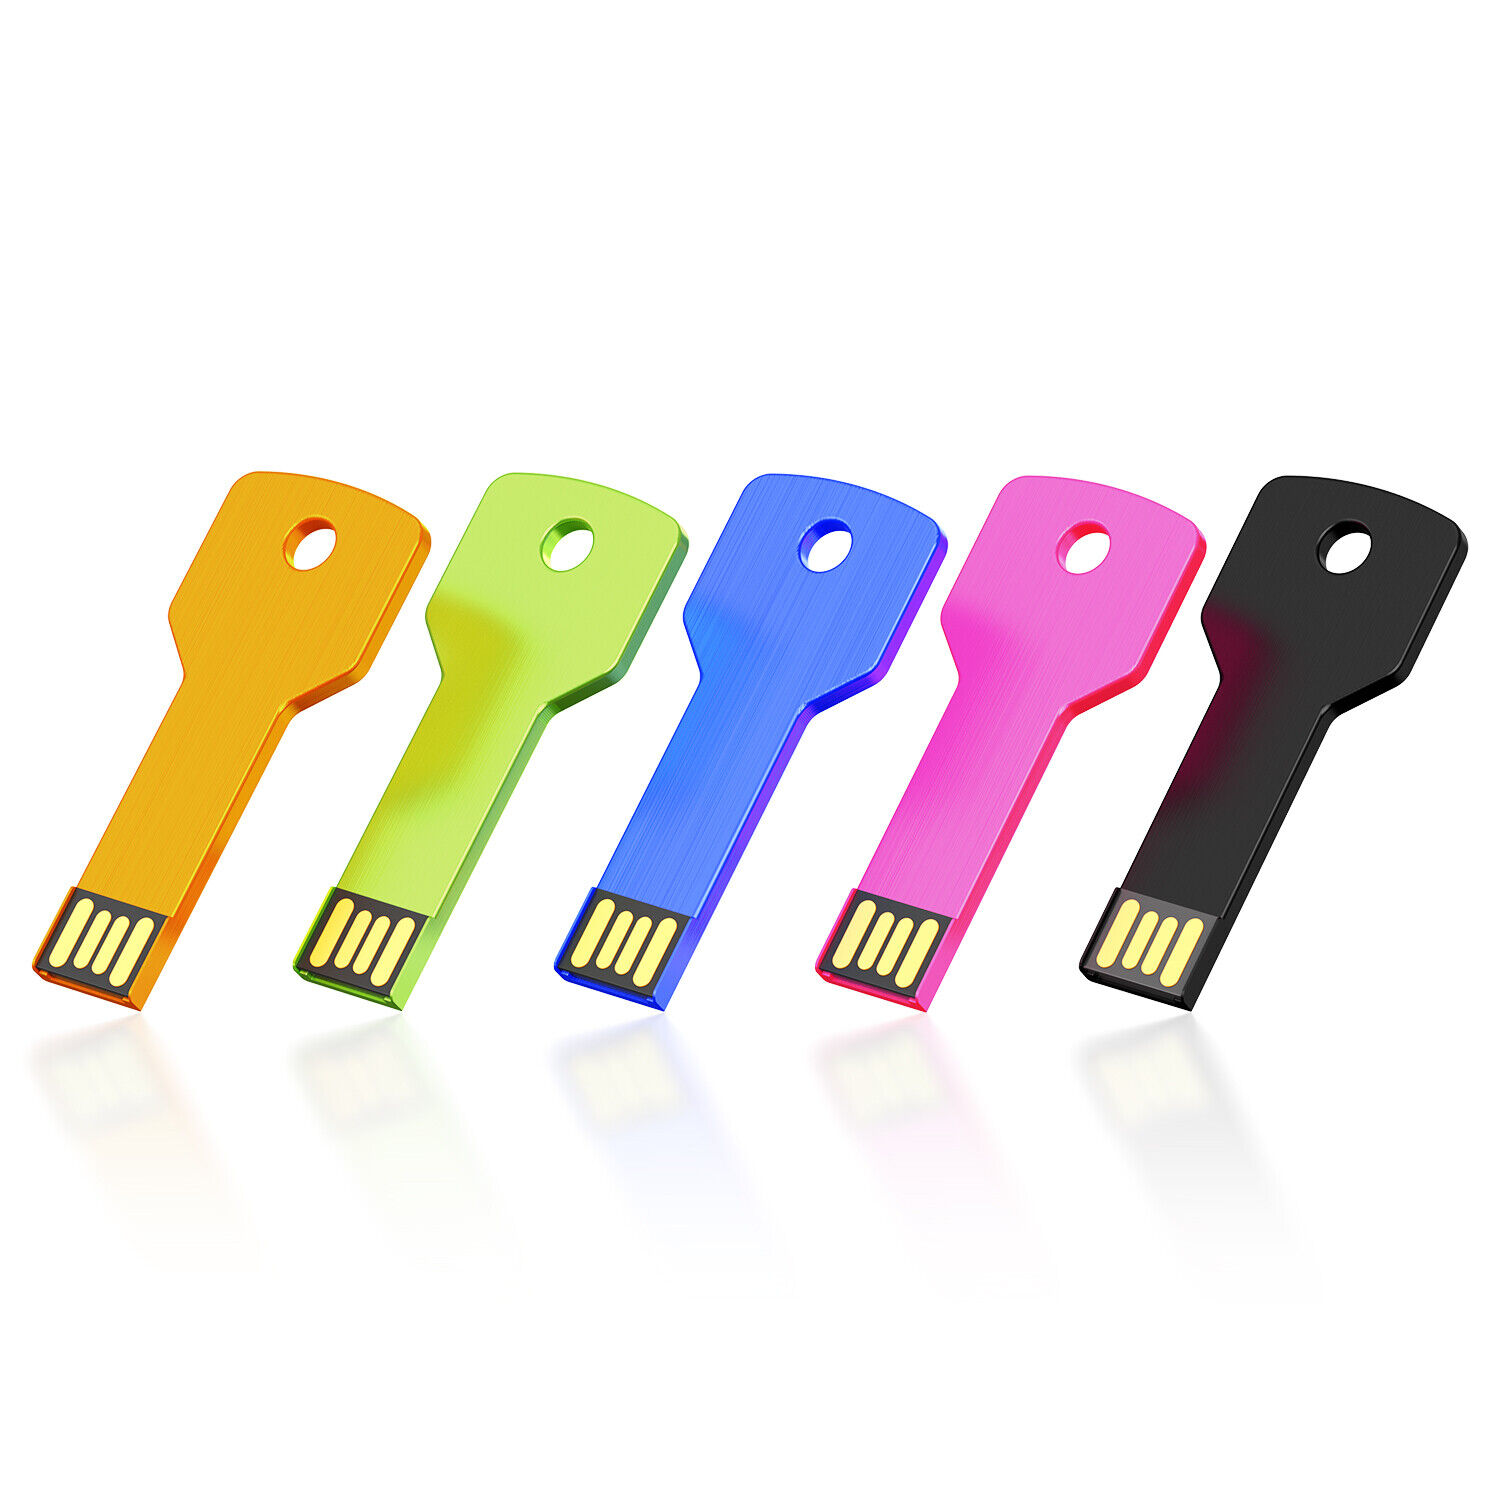 External Drive USB 2.0 2GB 5/10/20/100 Unites USB Flash Drive Wholesale Lot PACK